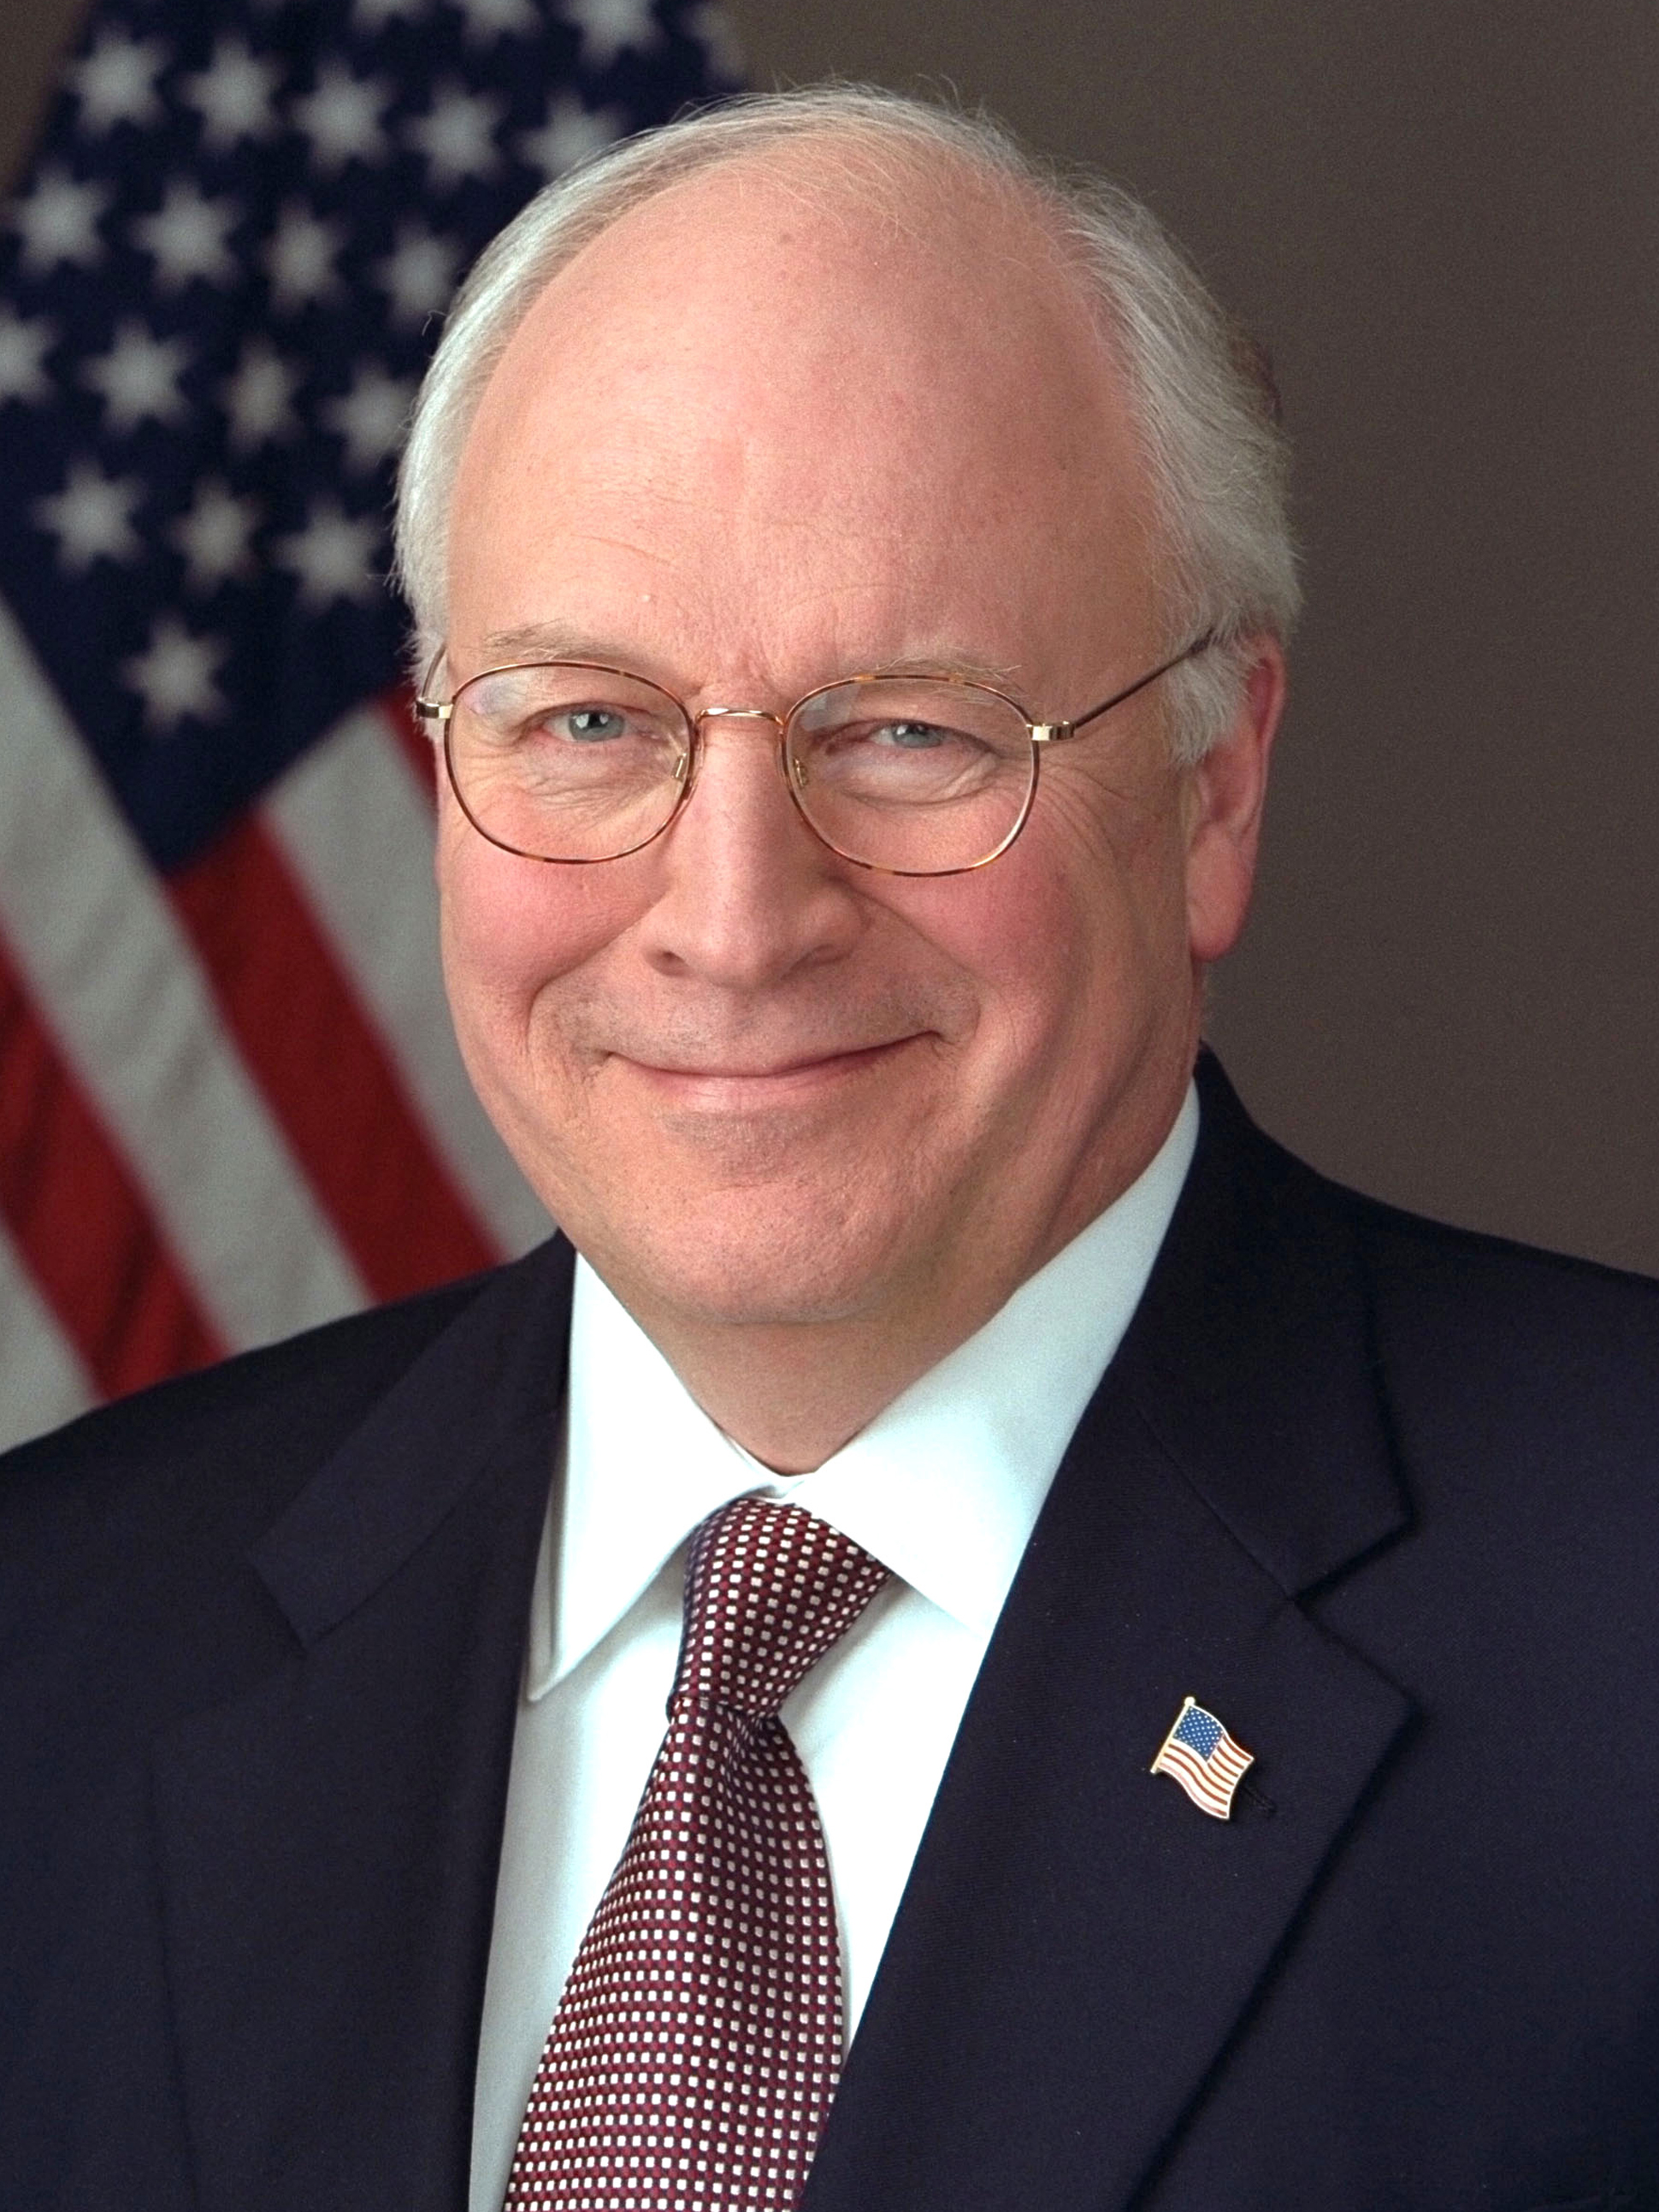 Dick Cheney (R-WY)